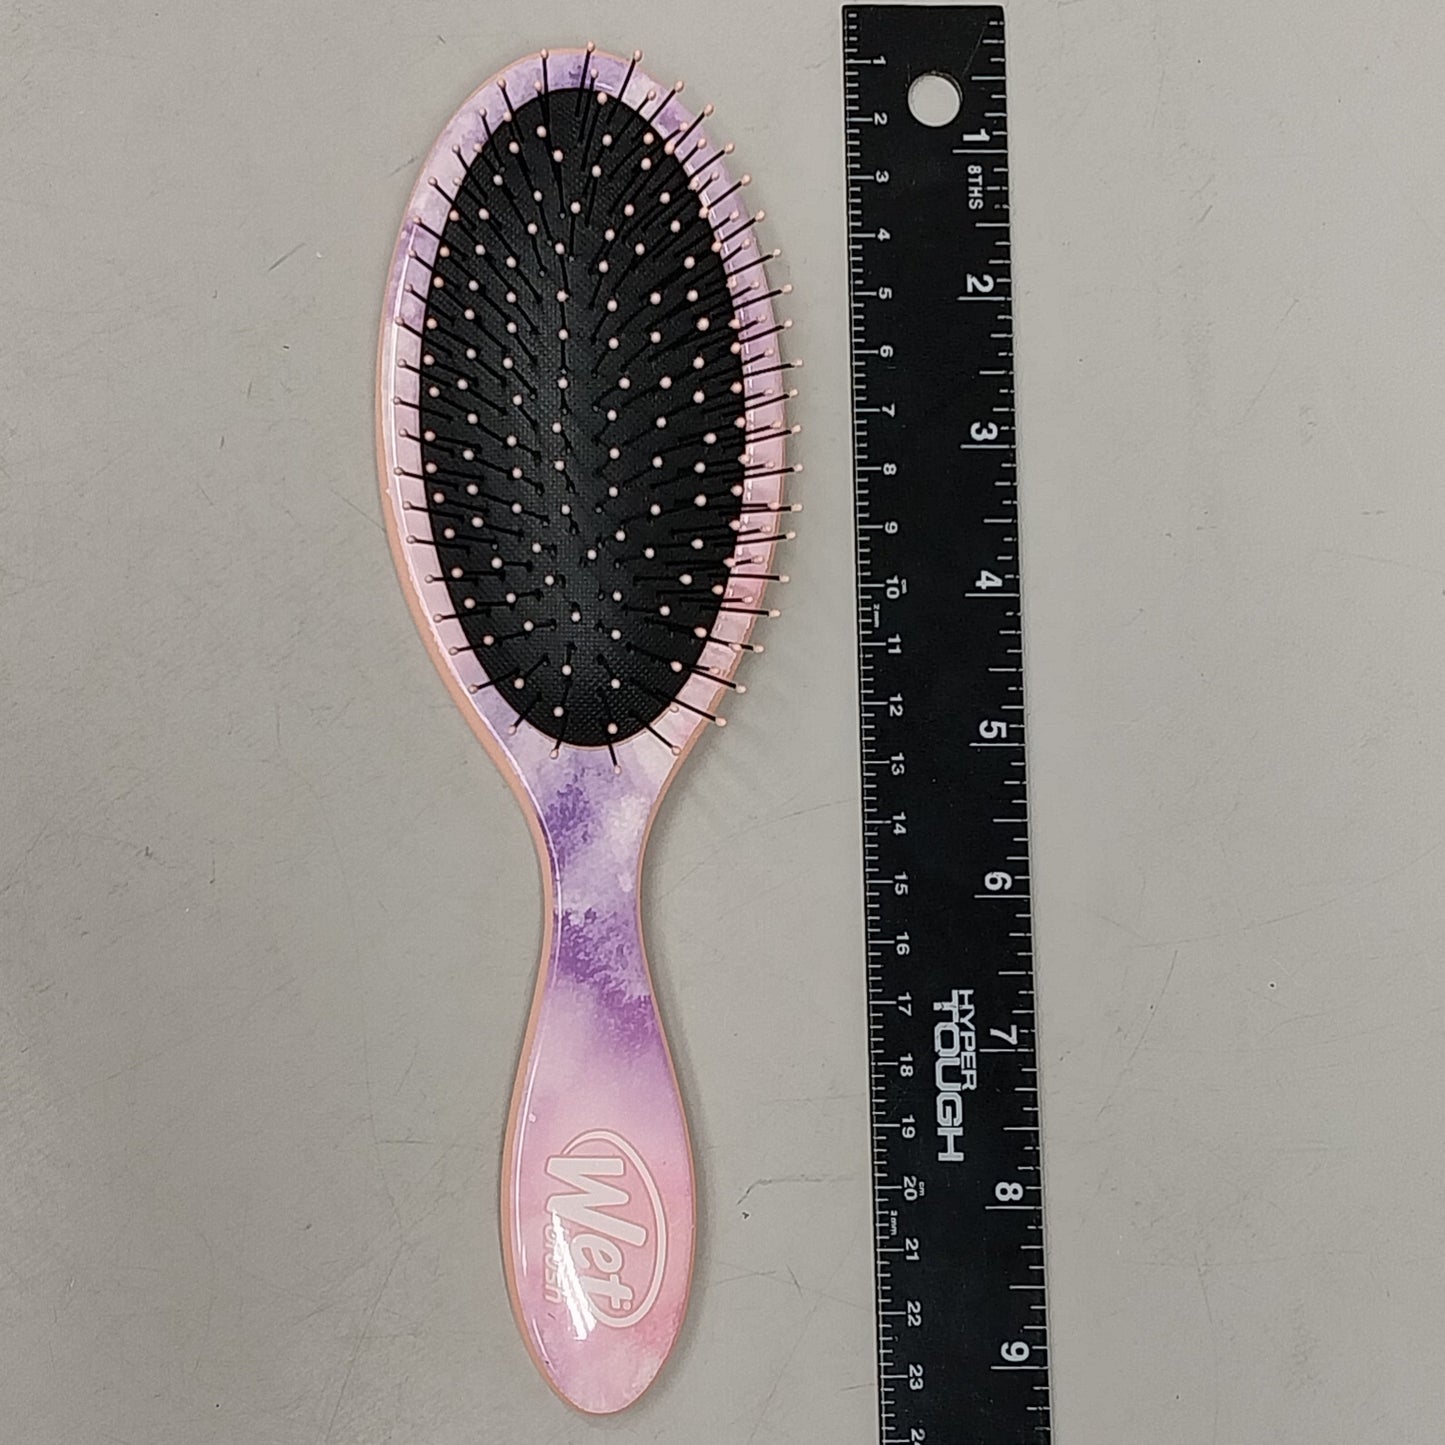 WET BRUSH (4 PACK) Original Detangler Hair Brush Pink / Purple Watermark Pattern